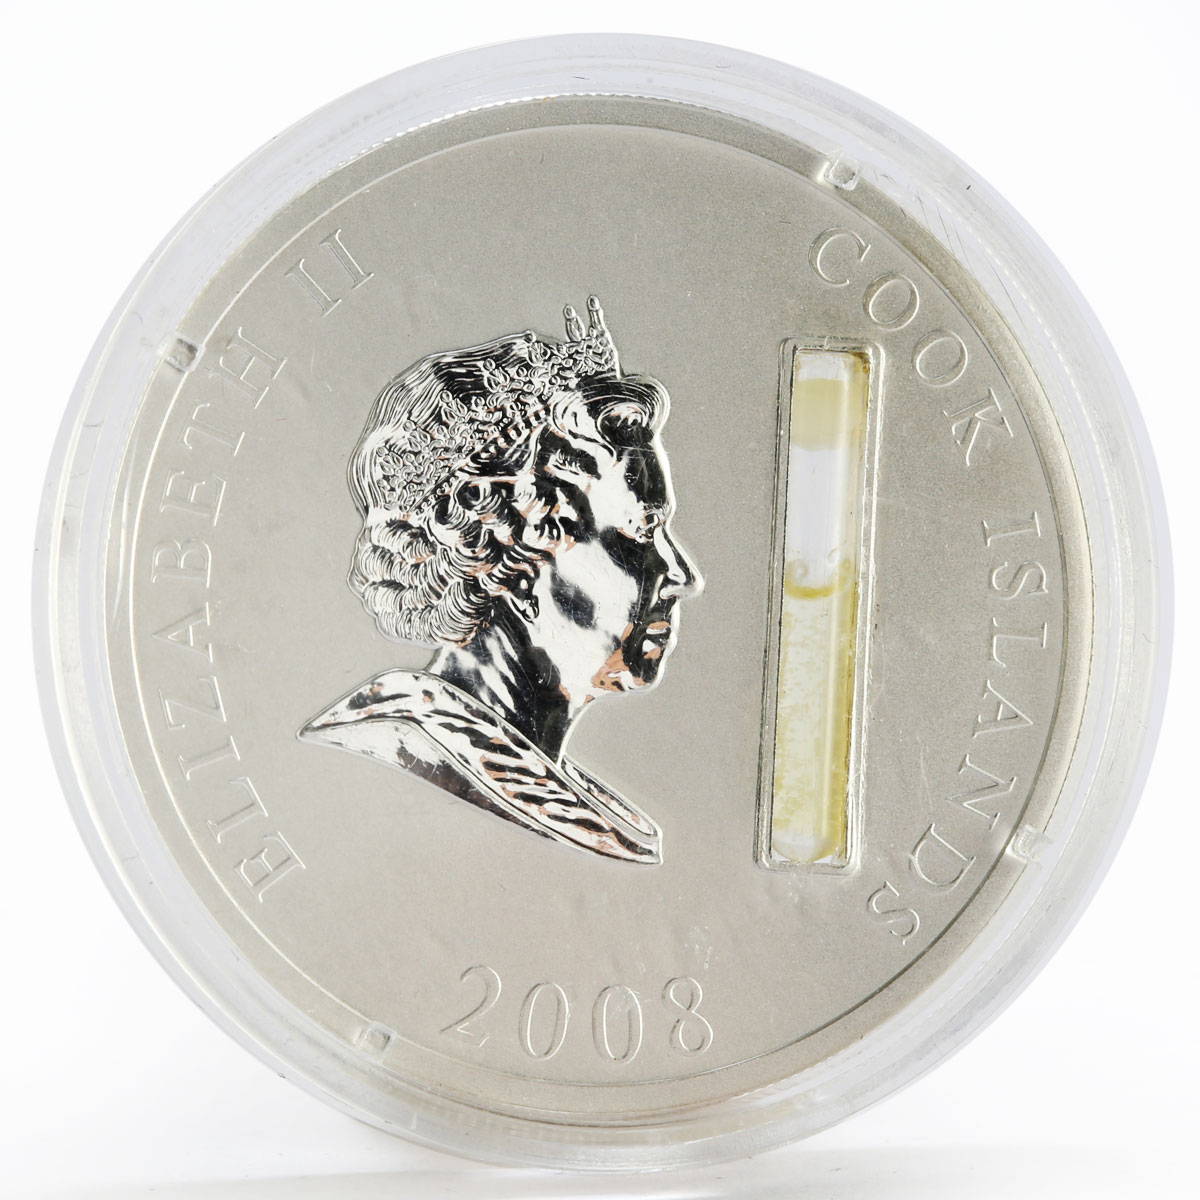 Cook Island 10 dollars John Davidson Rockefeller Sr. proof silver coin 2008